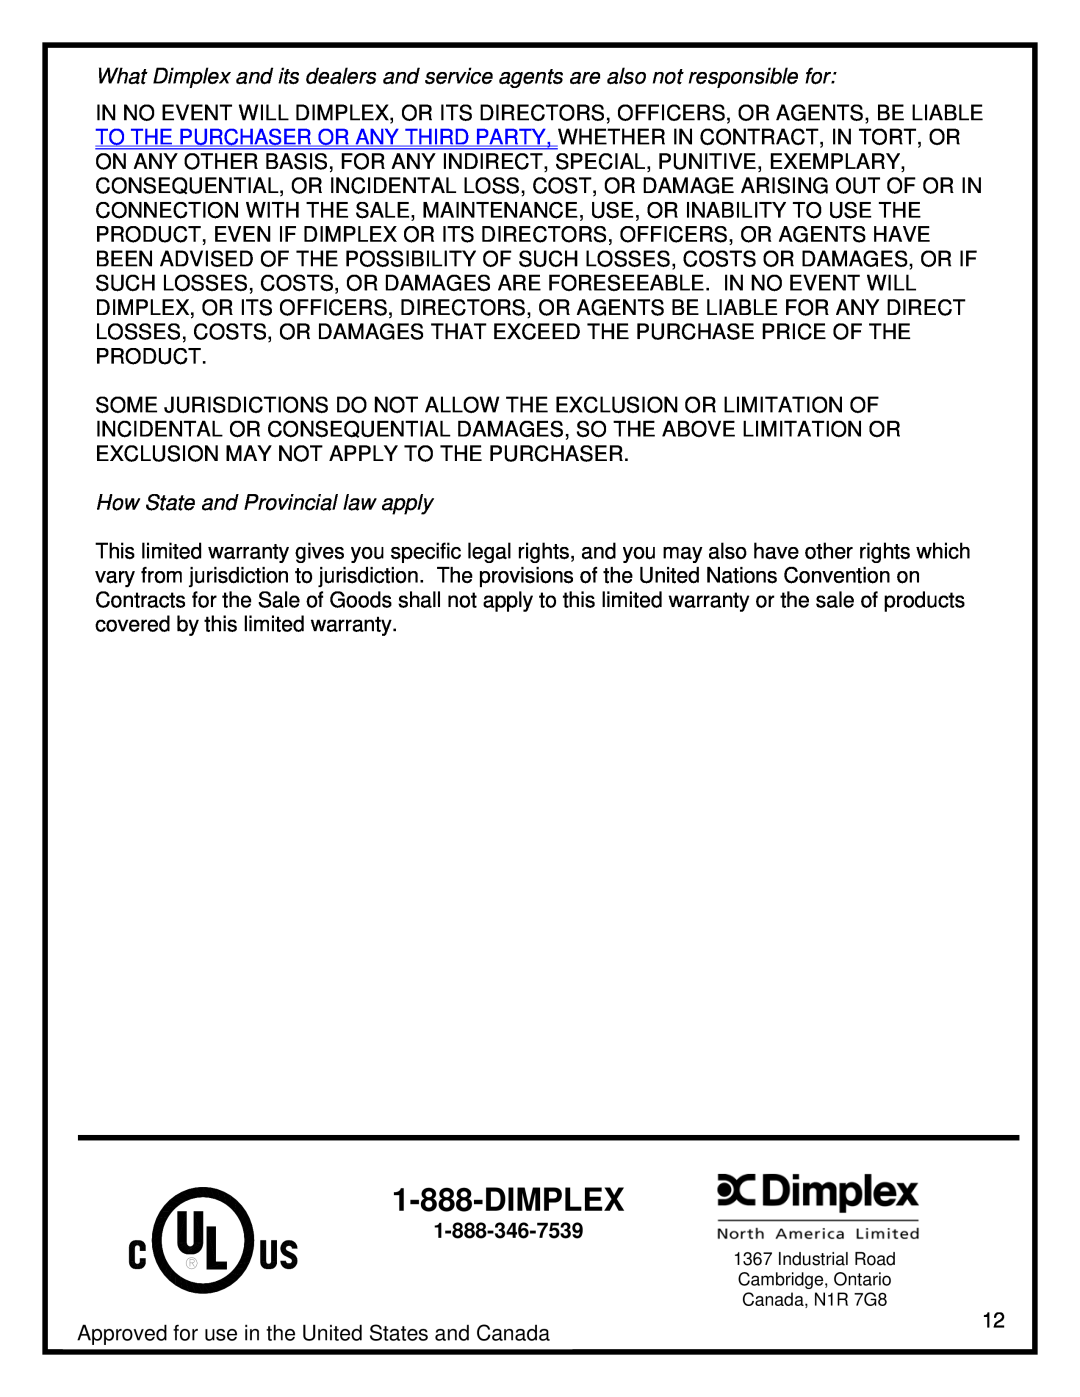 Dimplex EWM-SS-BLK, EWM-COPPER manual Dimplex, How State and Provincial law apply, 1-888-346-7539 